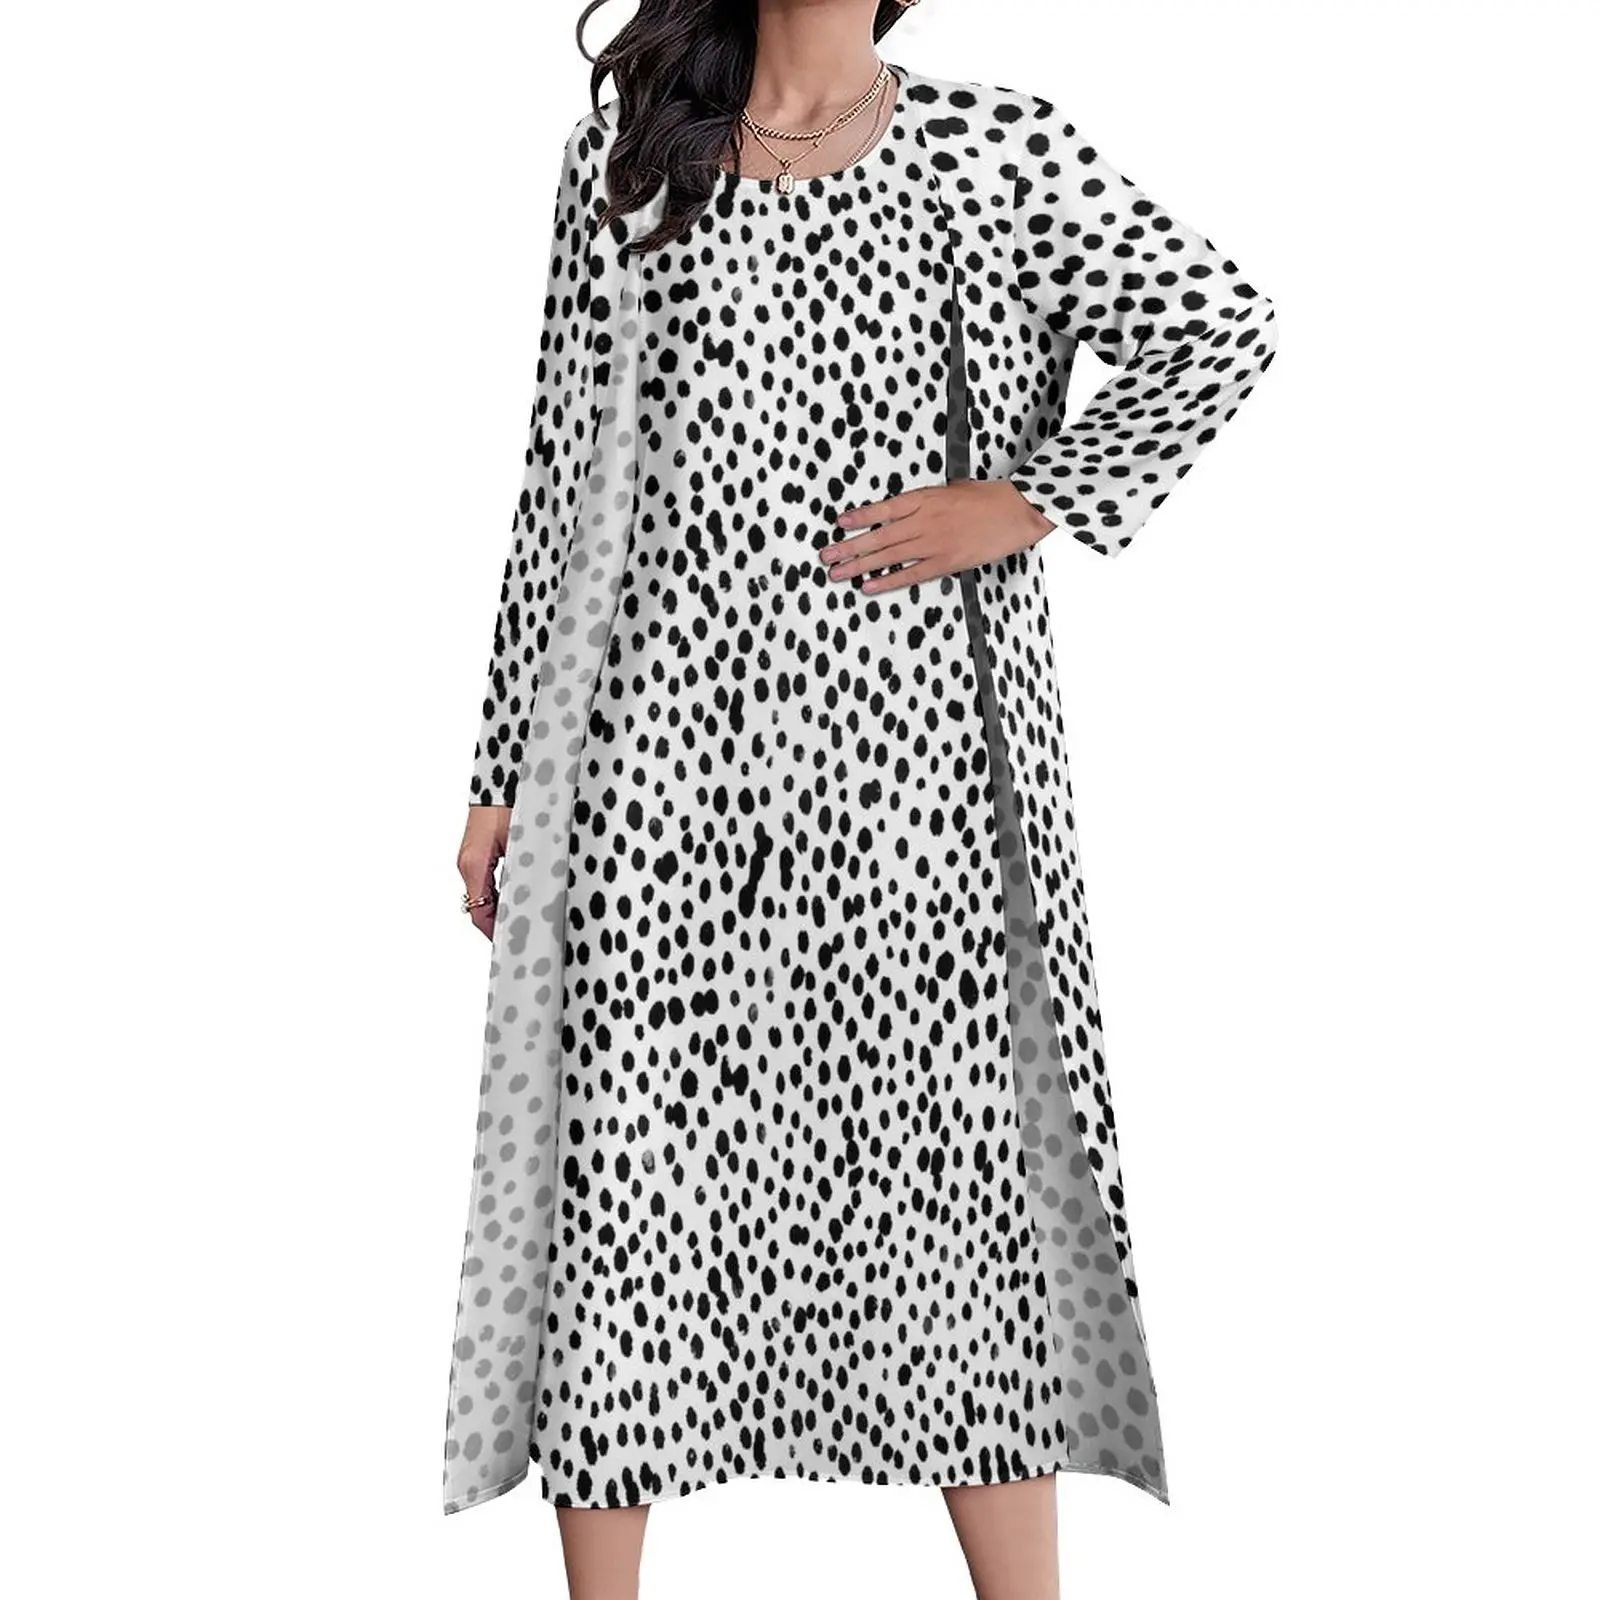 

Dalmatian Dress Summer Animal Prints Street Fashion Casual Long Dresses Woman Design Beach Maxi Dress Big Size 5XL